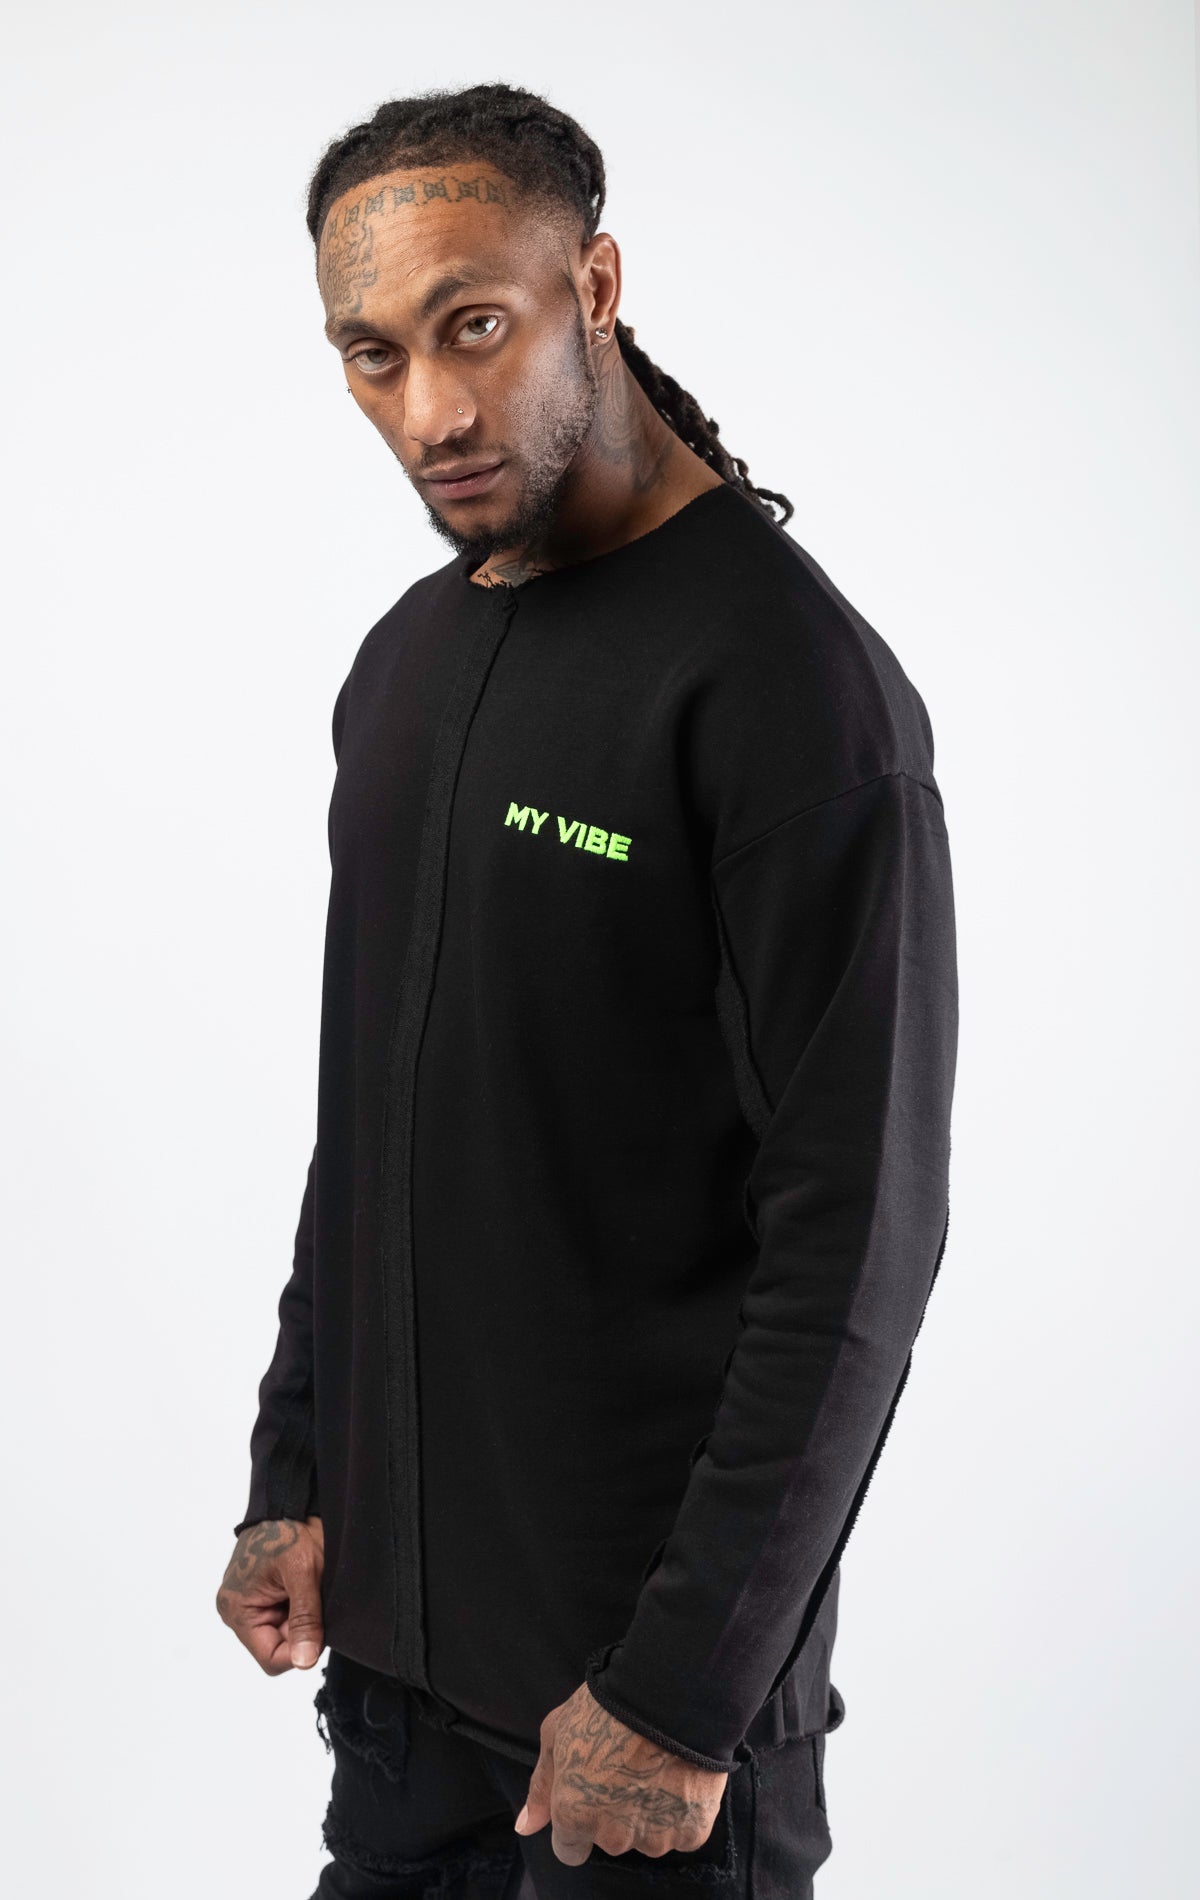 Black sweatshirt with "My Vibe" logo on chest left side.